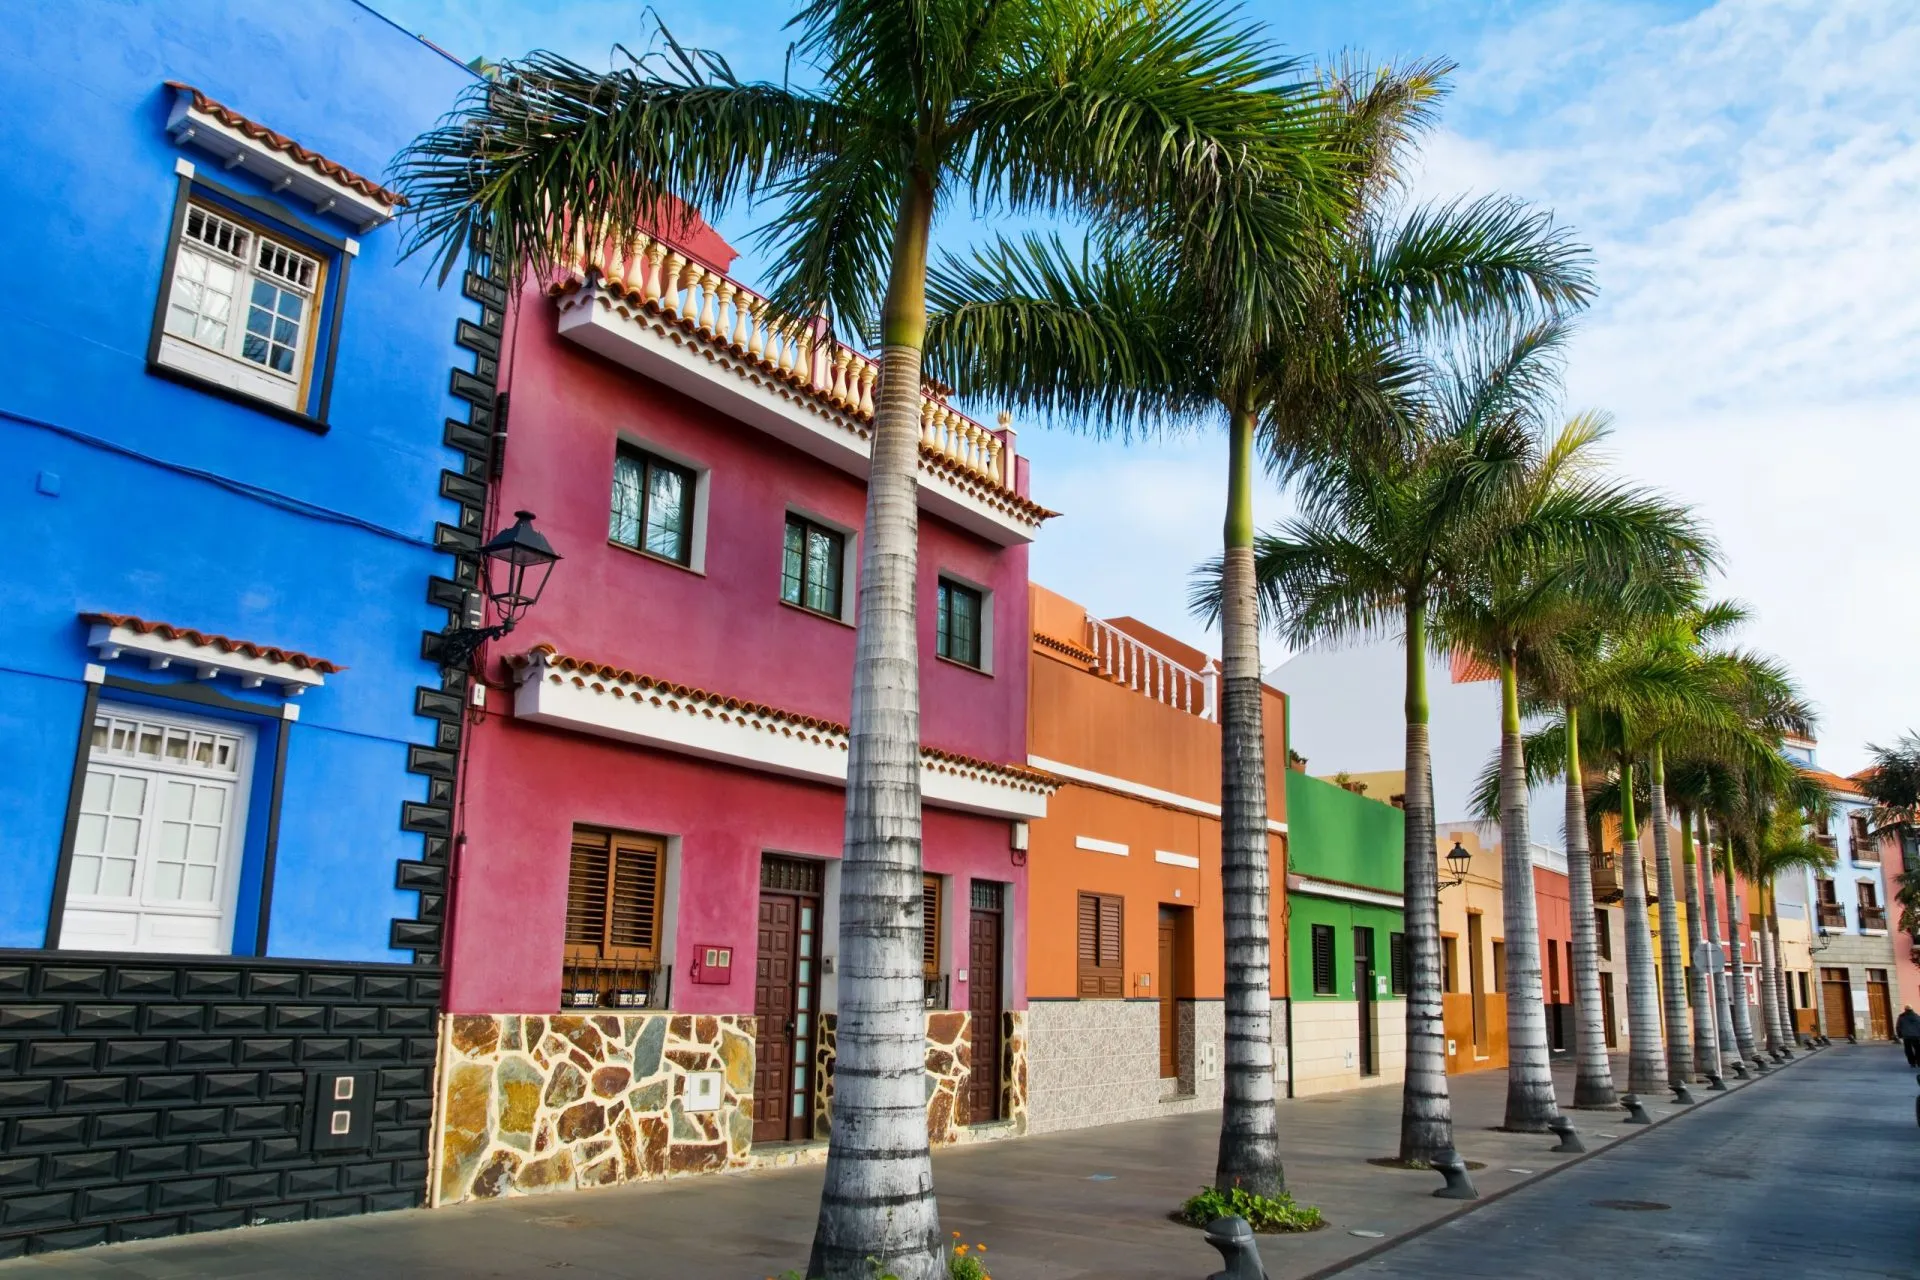 Fargerike hus og palmer i en gate i Puerto de la Cruz, Tenerife, Kanariøyene.